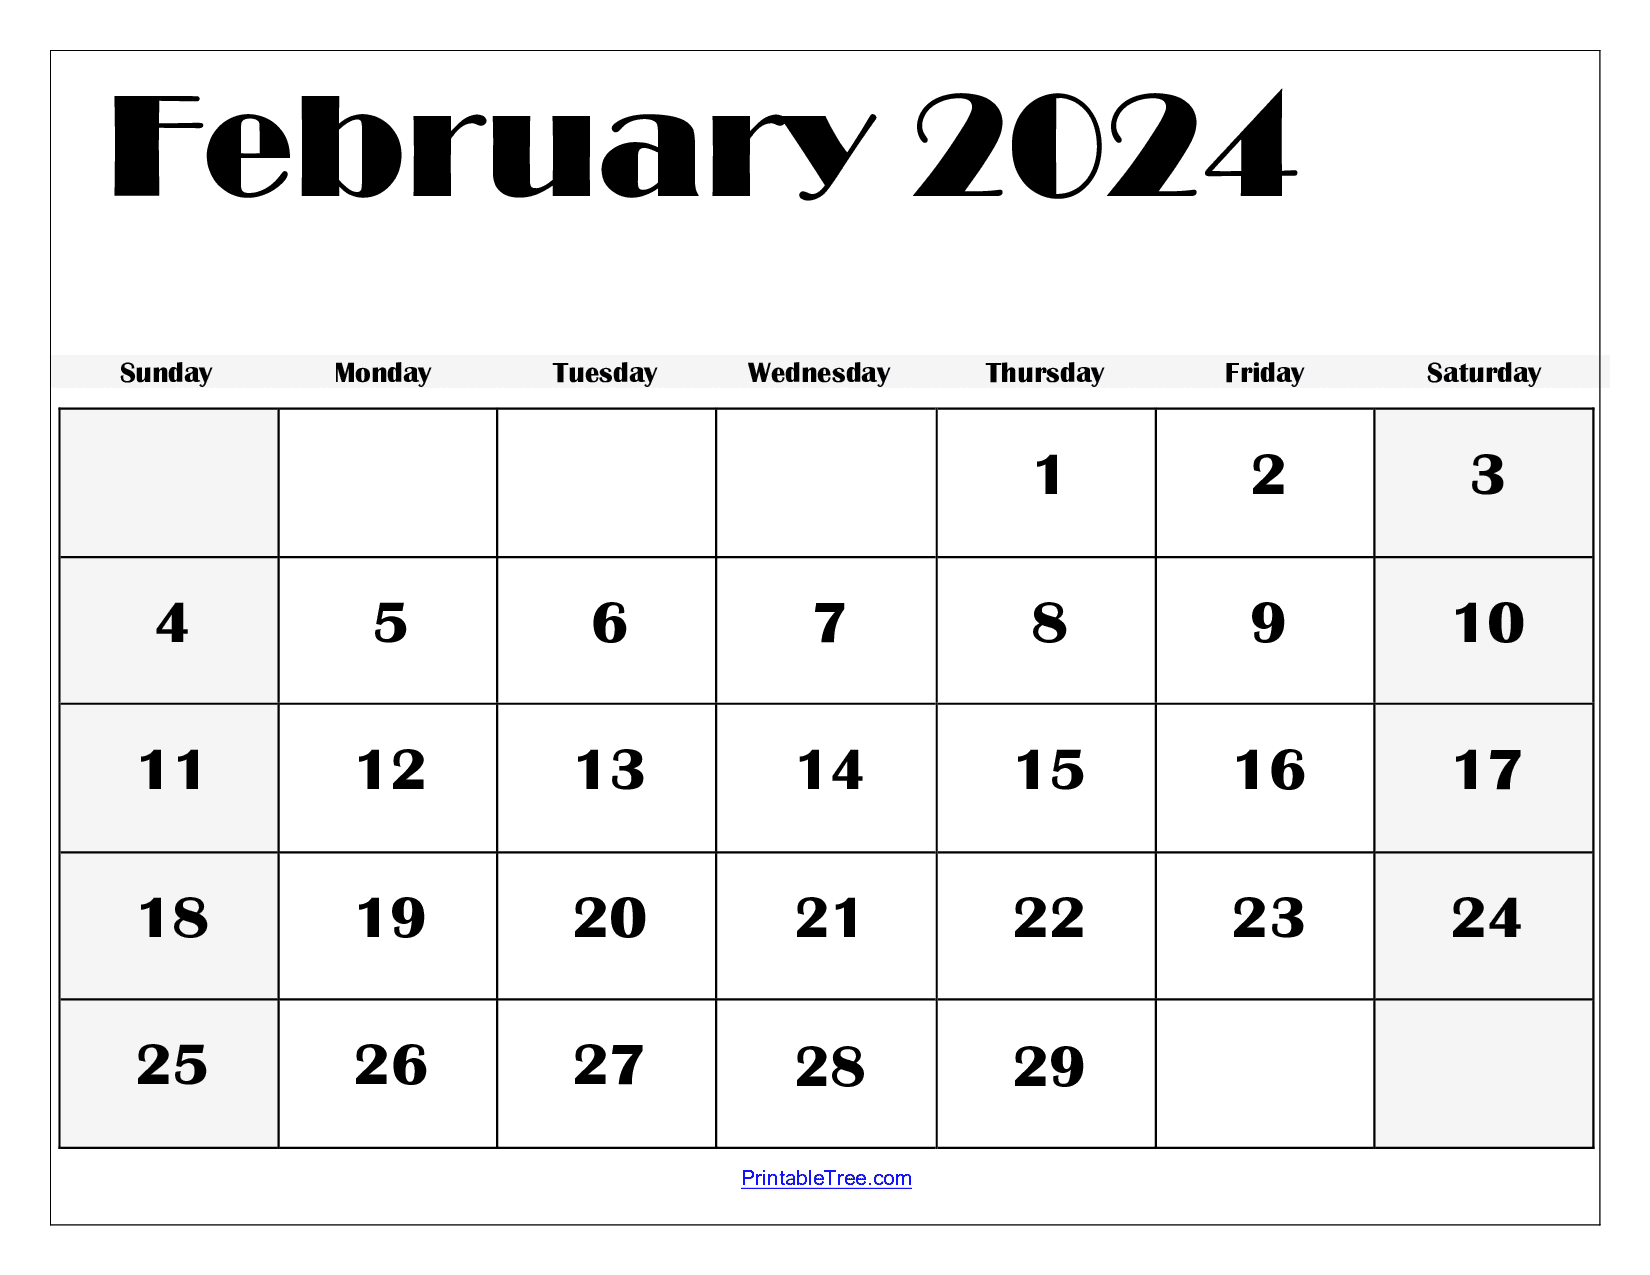 February 2024 Calendar Printable Pdf Template With Holidays for Blank Printable February 2024 Calendar